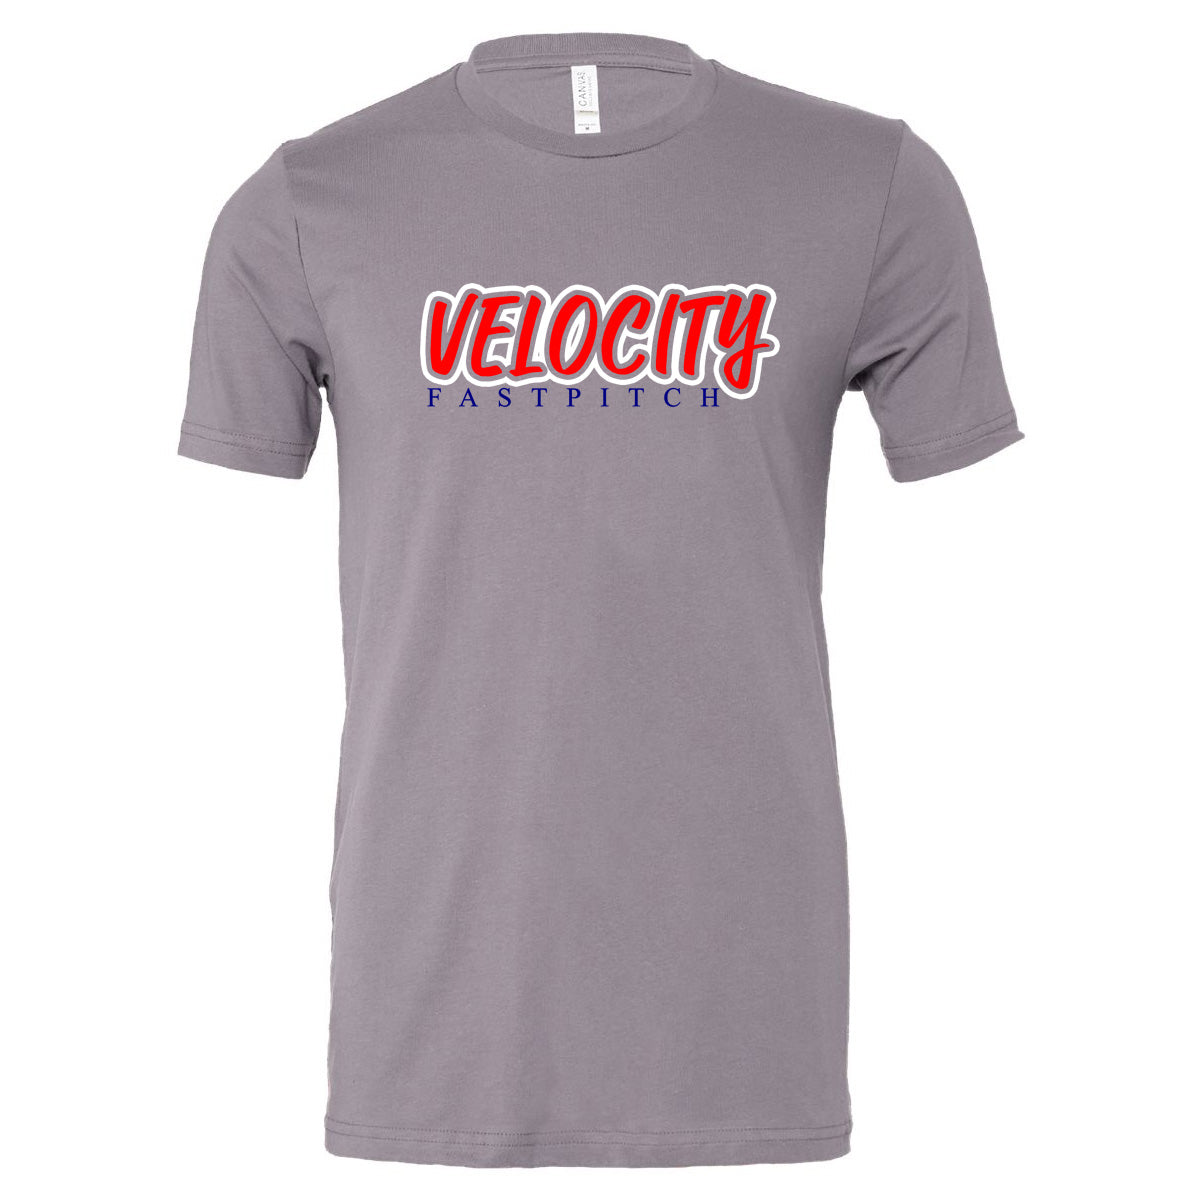 Velo FP - Velocity Fastpitch - Grey Concrete (Tee/DriFit/Hoodie/Sweatshirt) - Southern Grace Creations